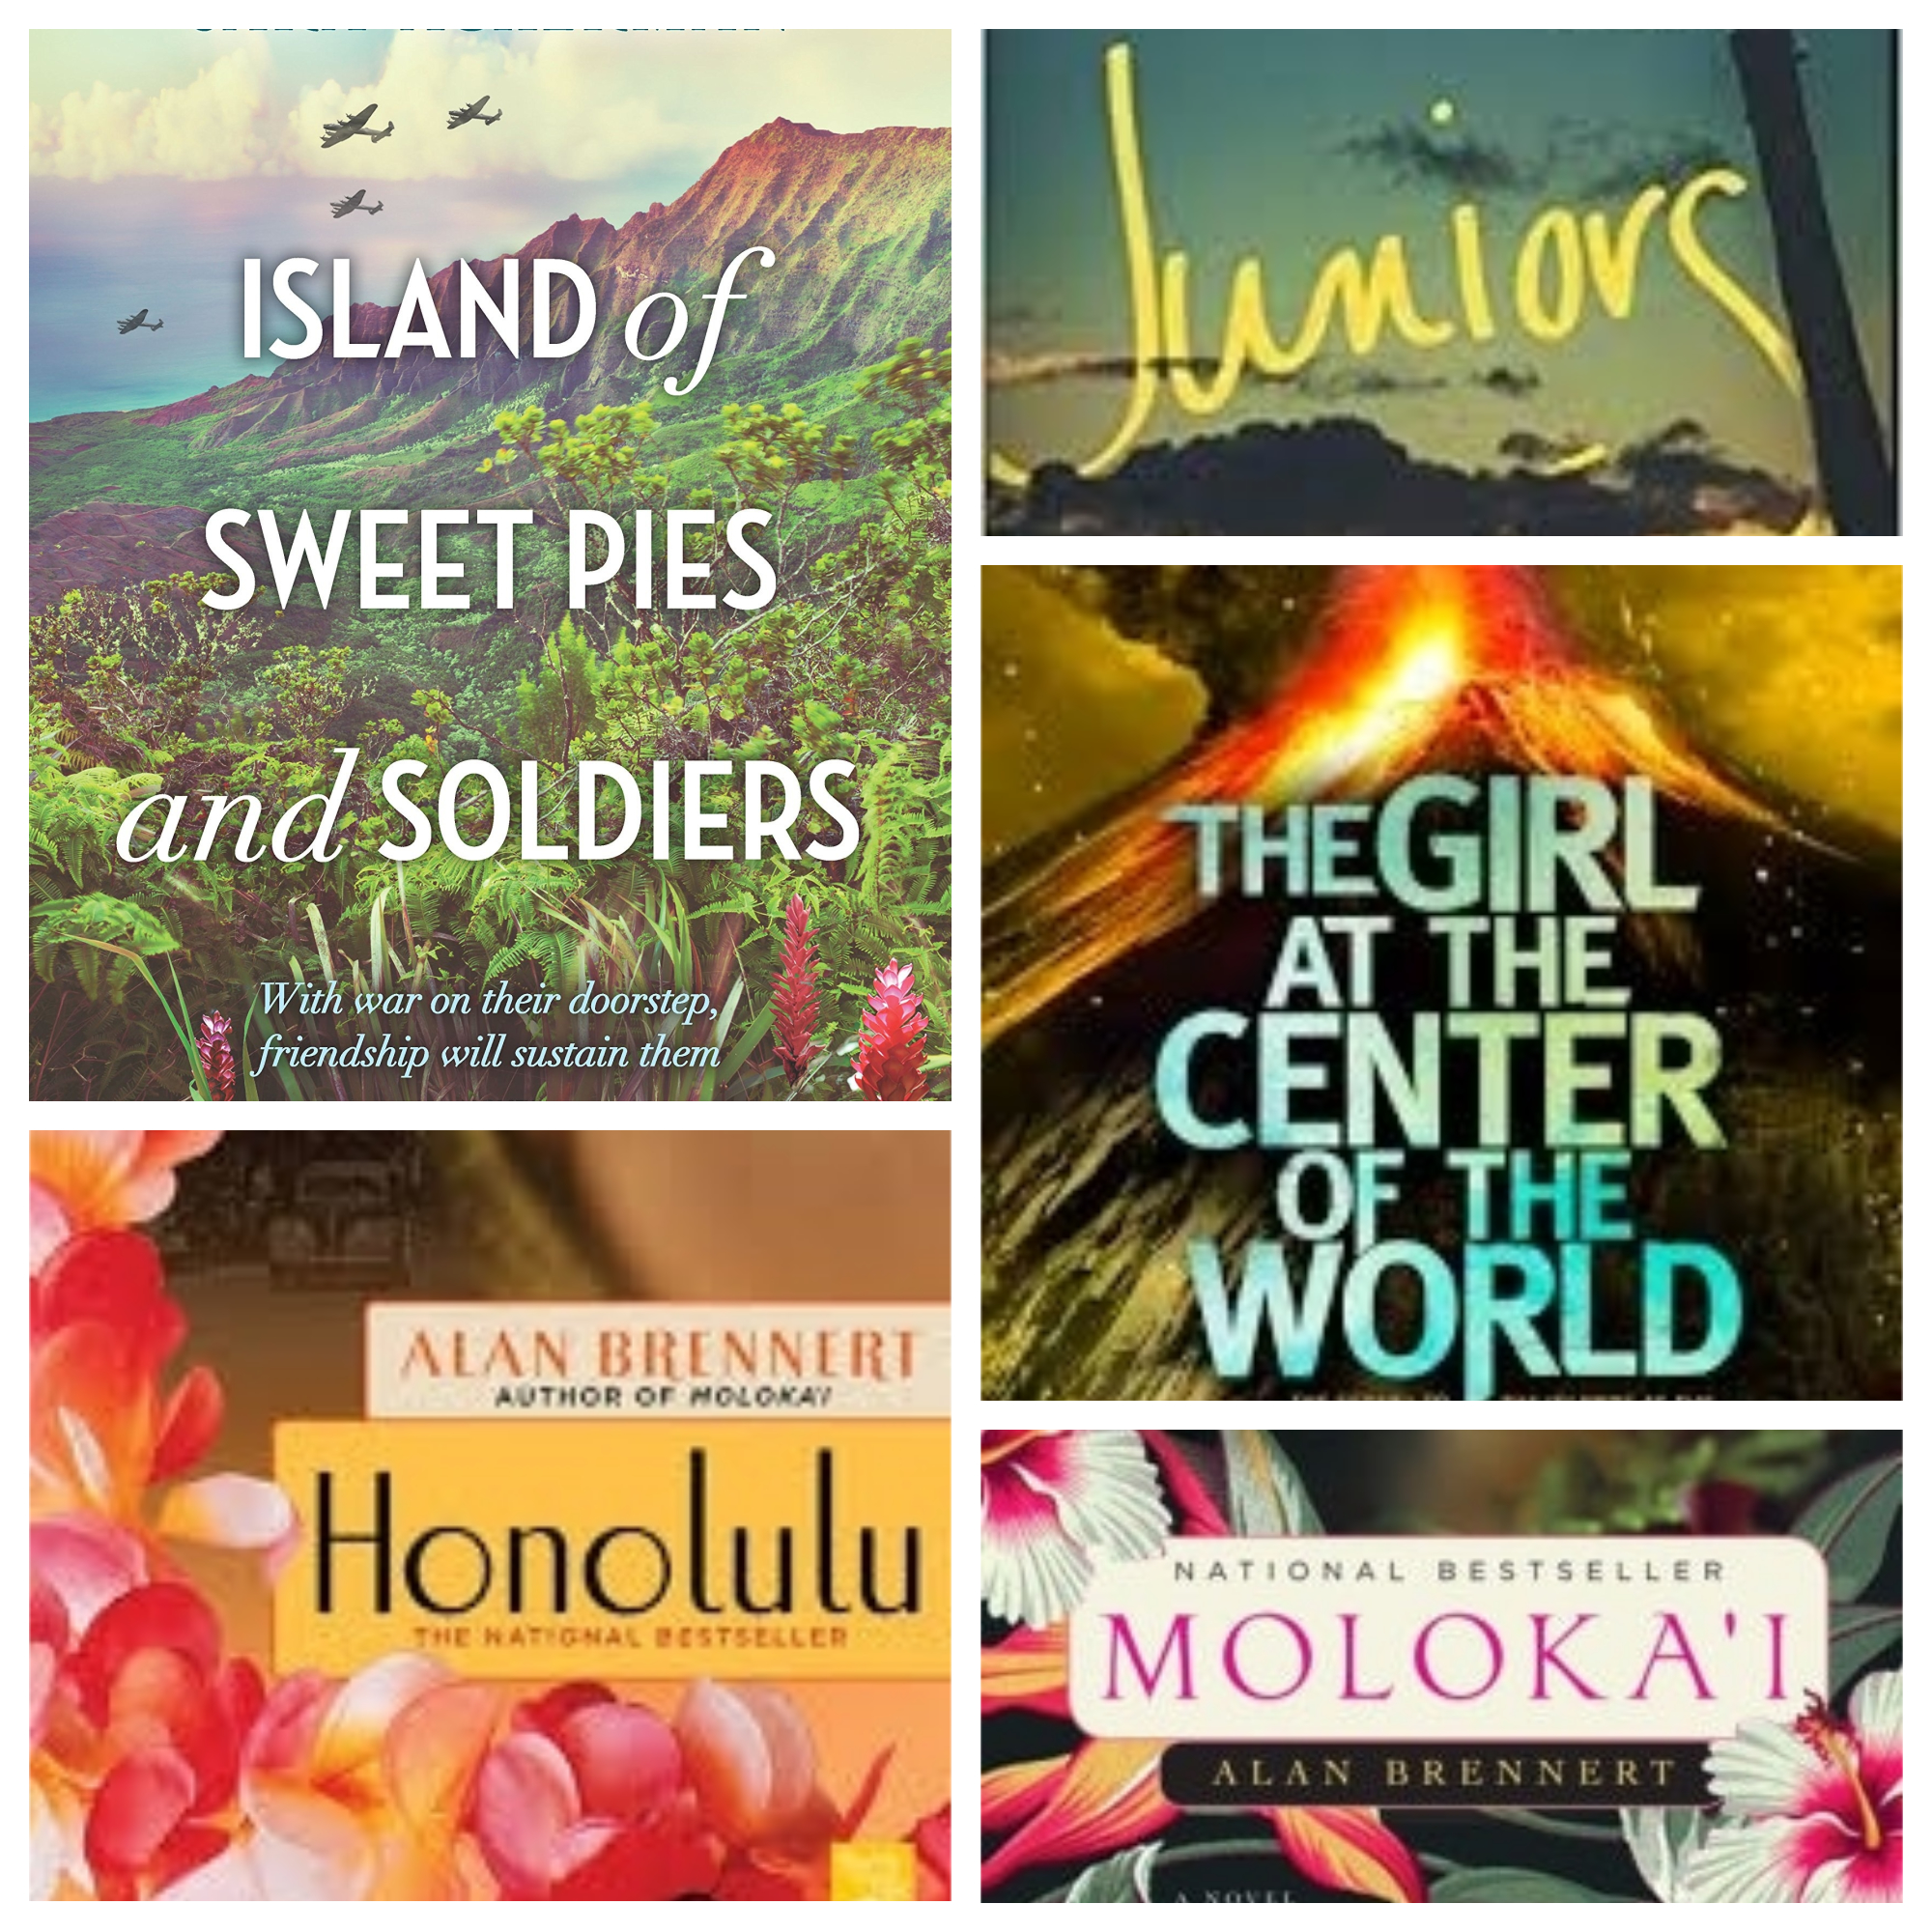 the hawaii novels moloka i and honolulu alan brennert